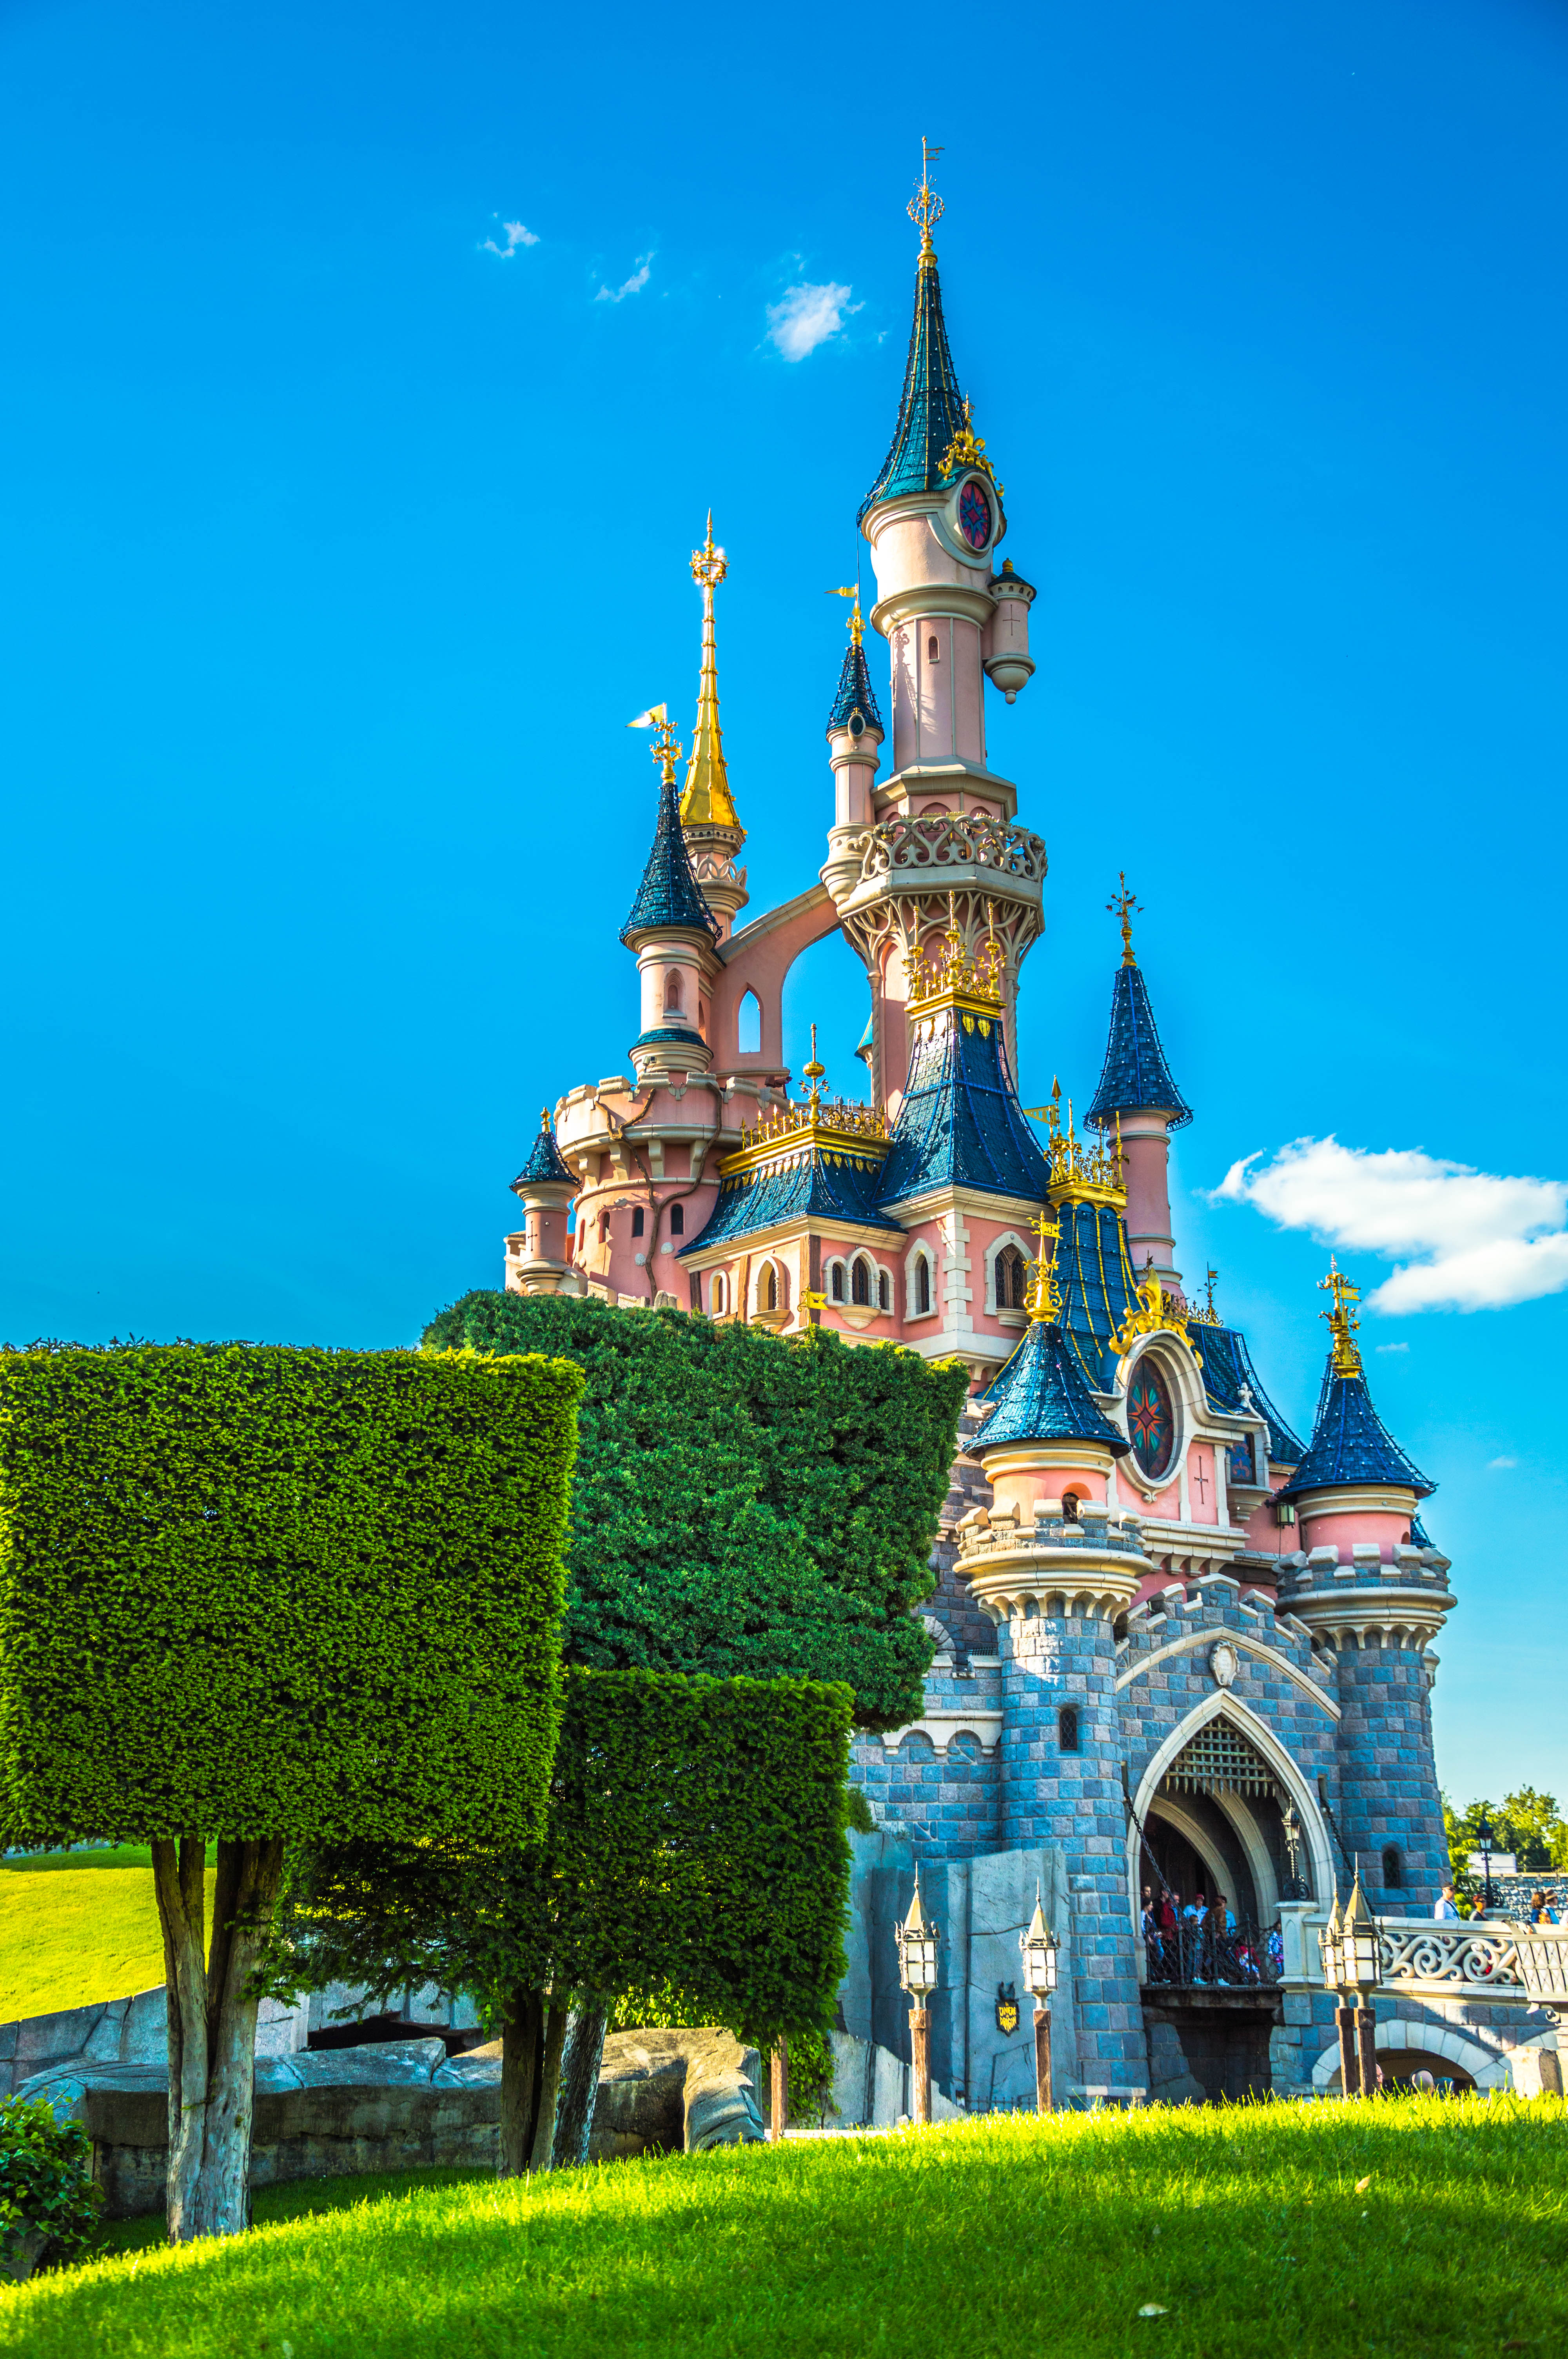 Photos de Disneyland Paris en HDR (High Dynamic Range) ! - Page 5 580346DSC0049